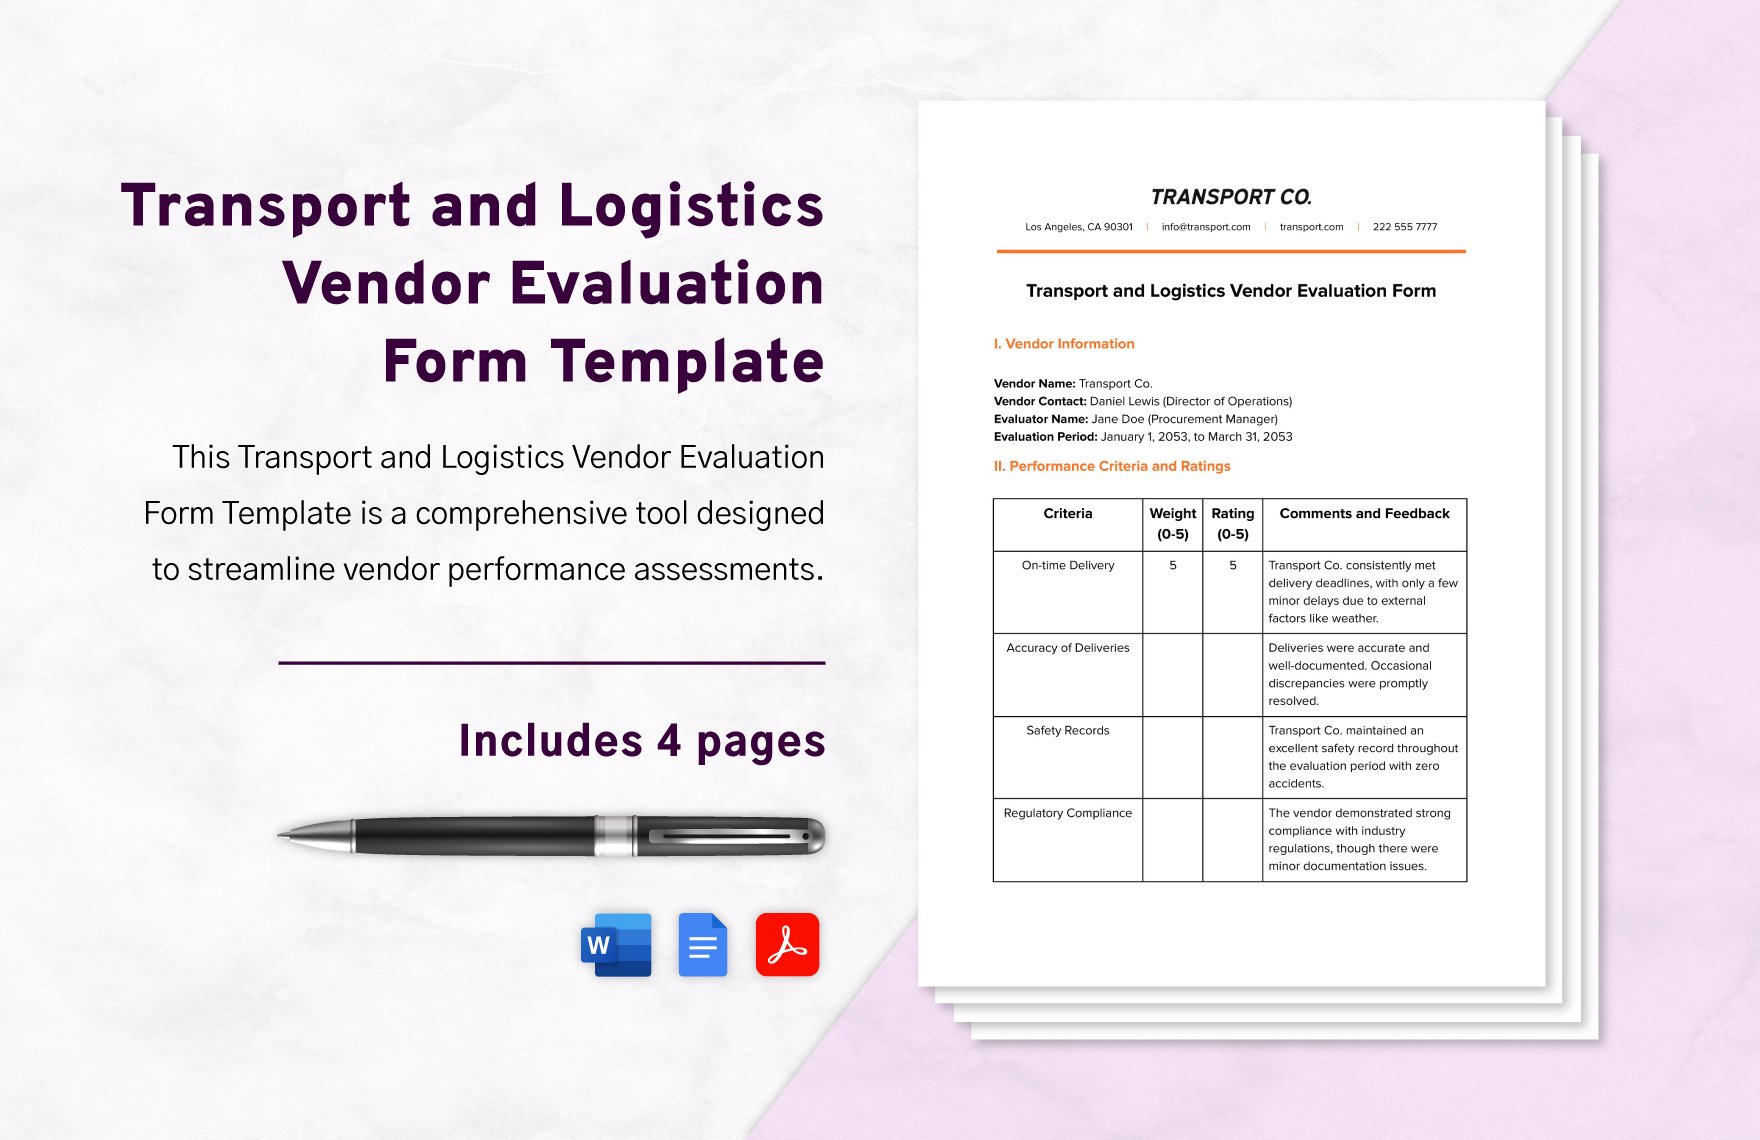 Transport and Logistics Vendor Evaluation Form Template in Word, Google Docs, PDF